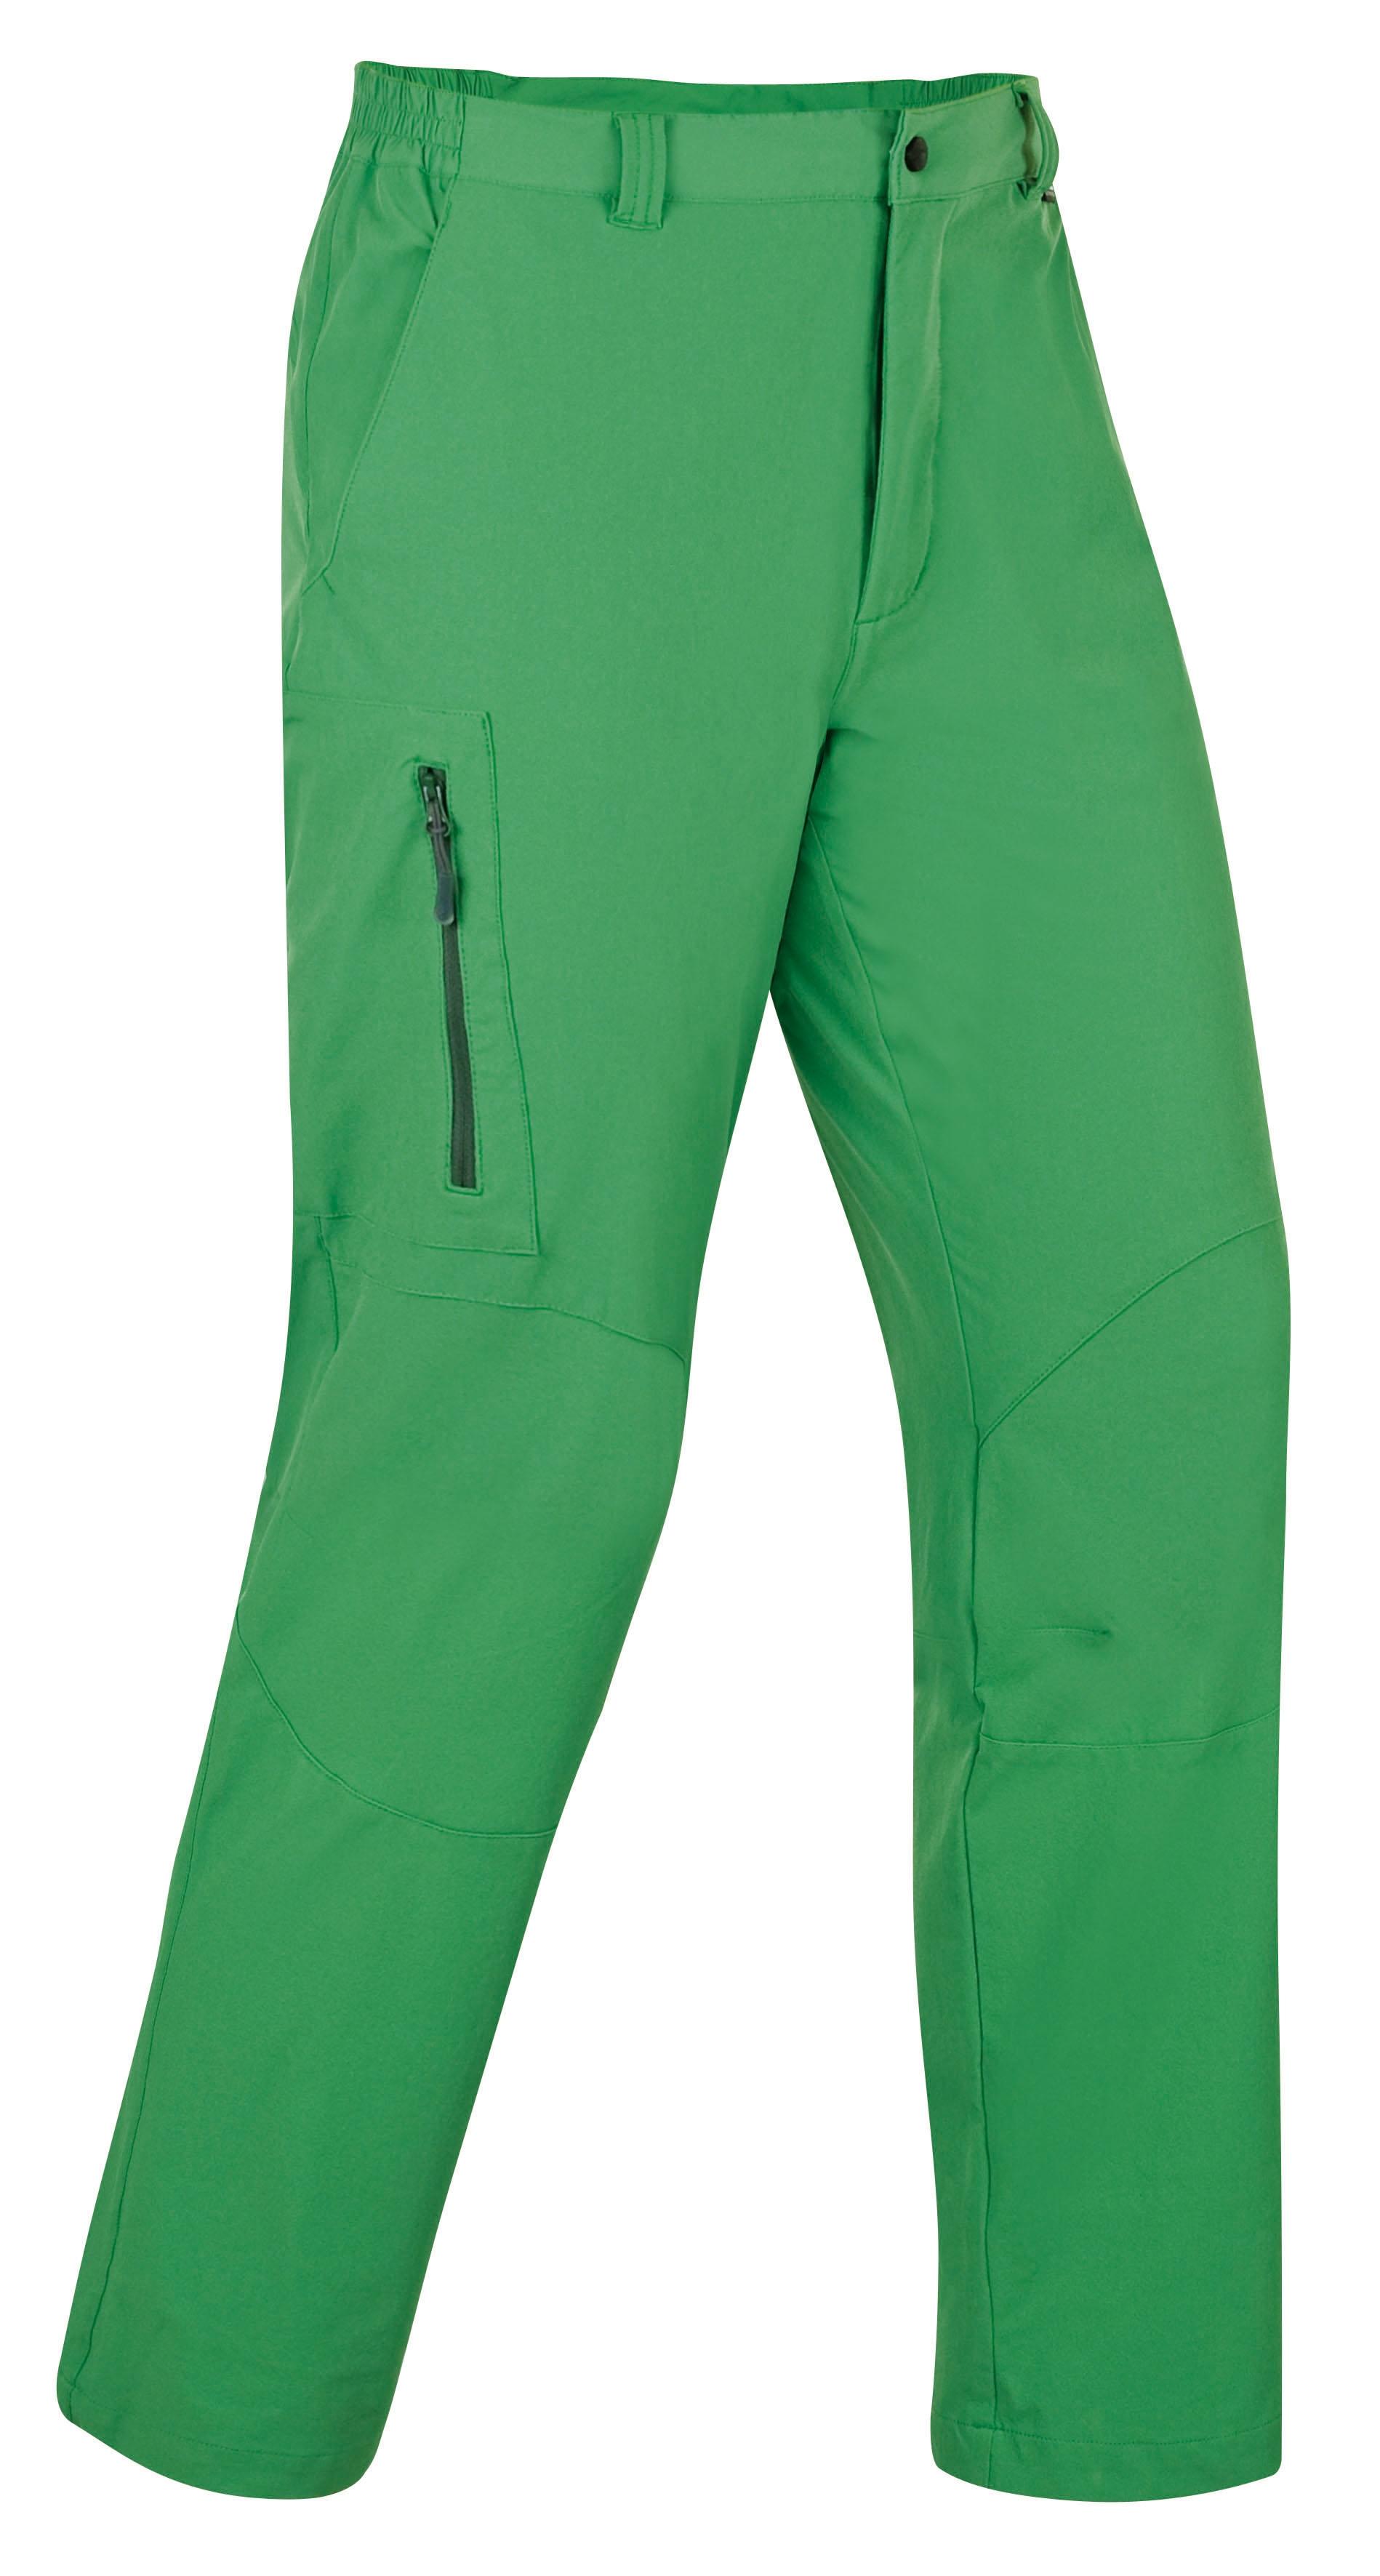 Foto Pantalones largos Salewa MITRE verde para hombre , s foto 973045